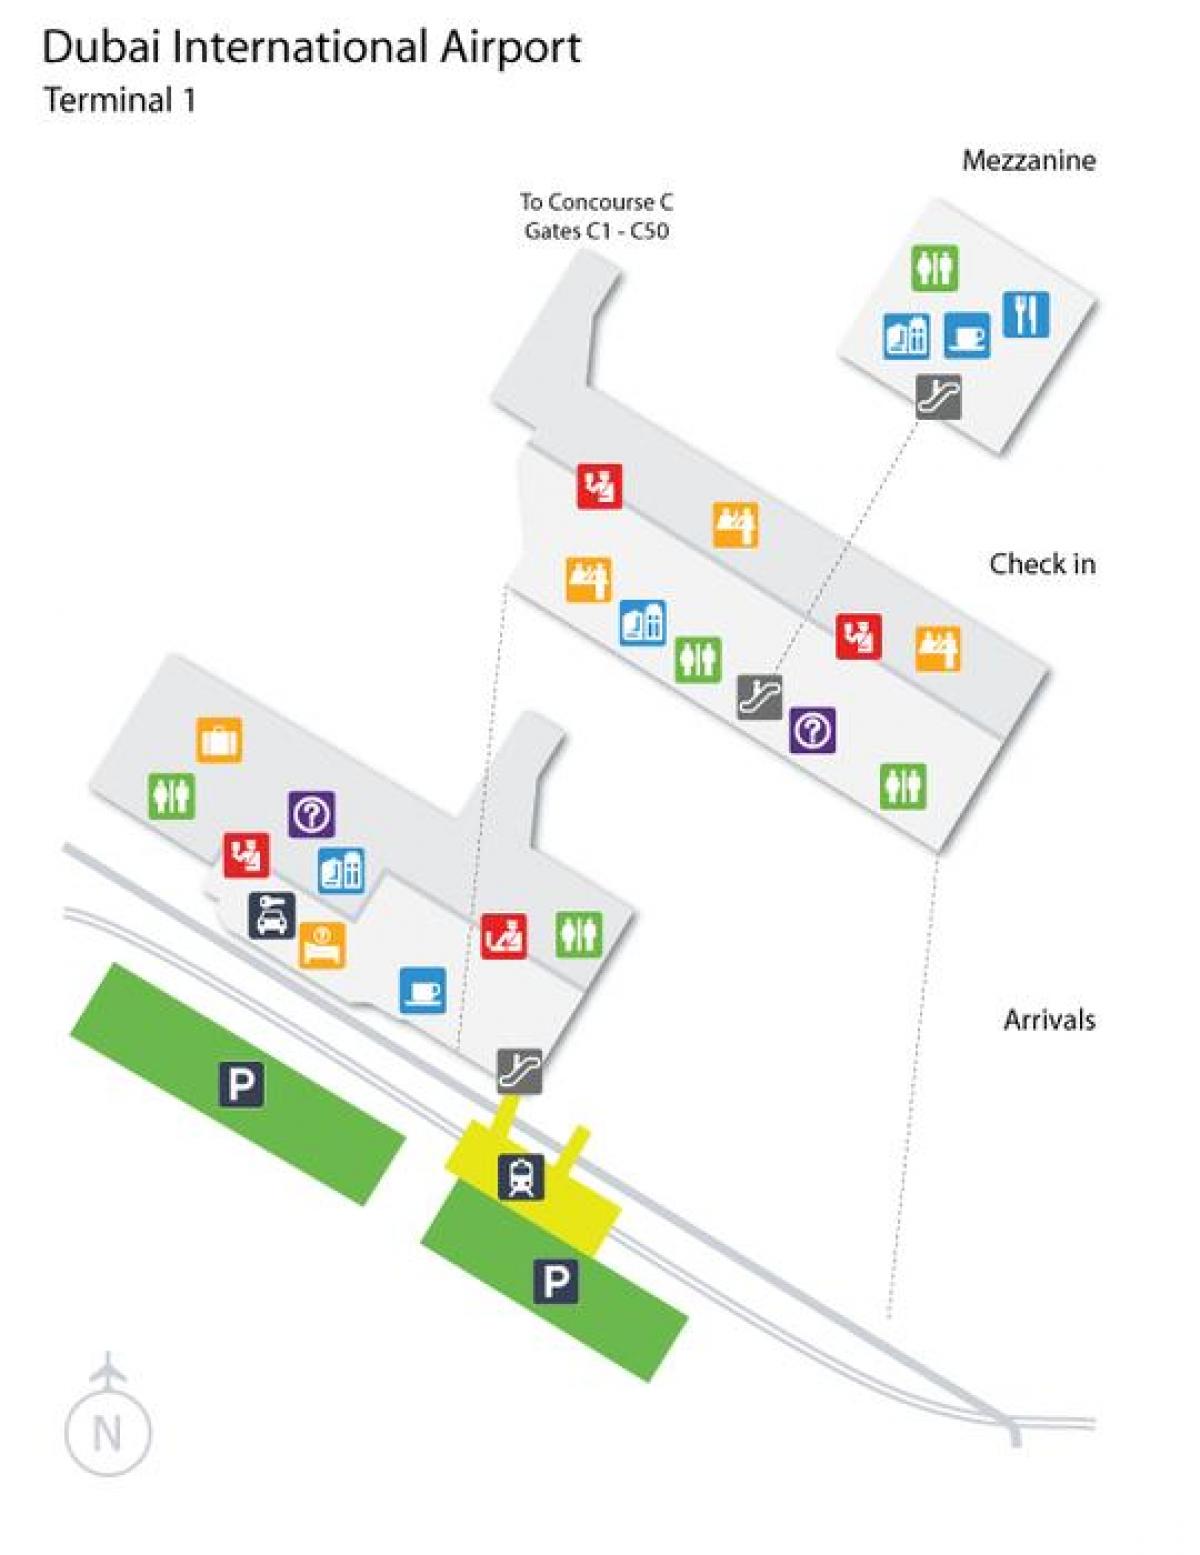 Dubai airport terminal 1 location map